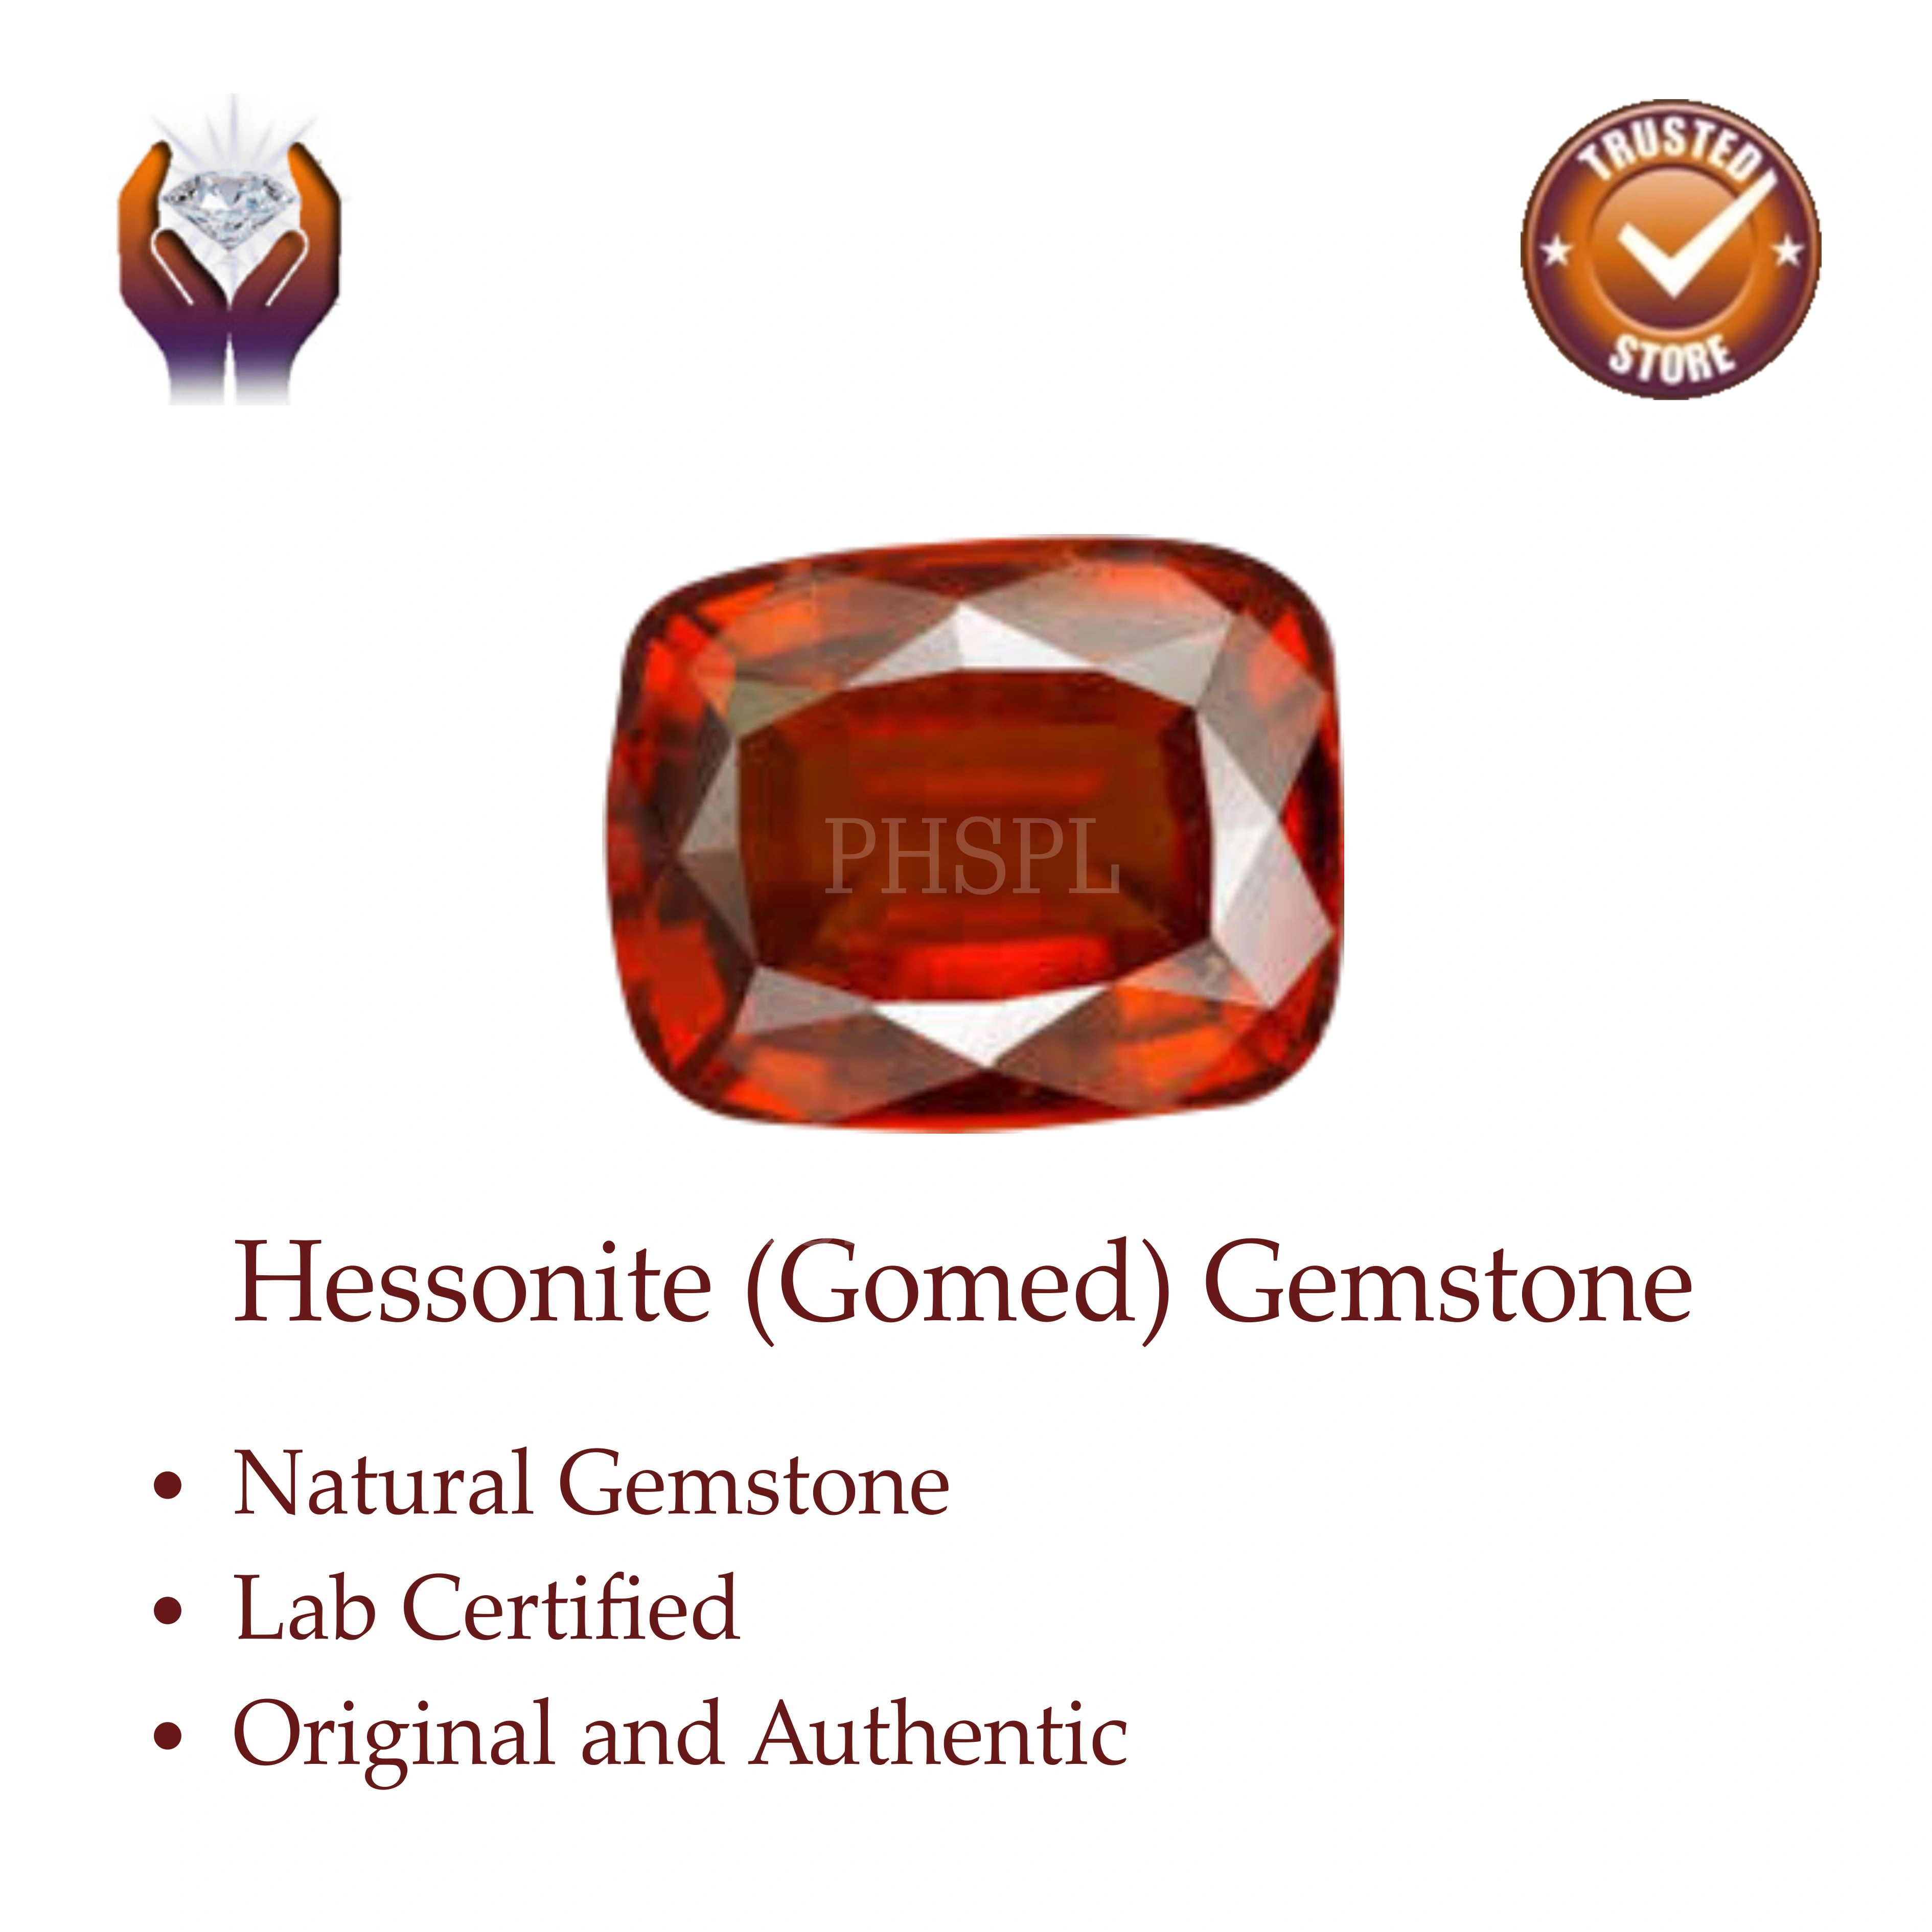 Gomed Gemstone